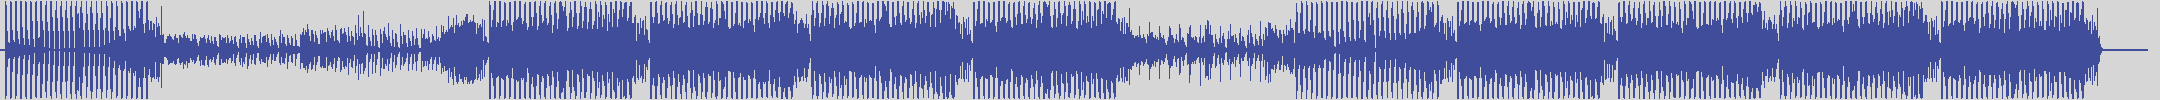 nf_boyz_records [NFY037] Santos Pasha - Gengis Khan [Dark Bass Mix] audio wave form